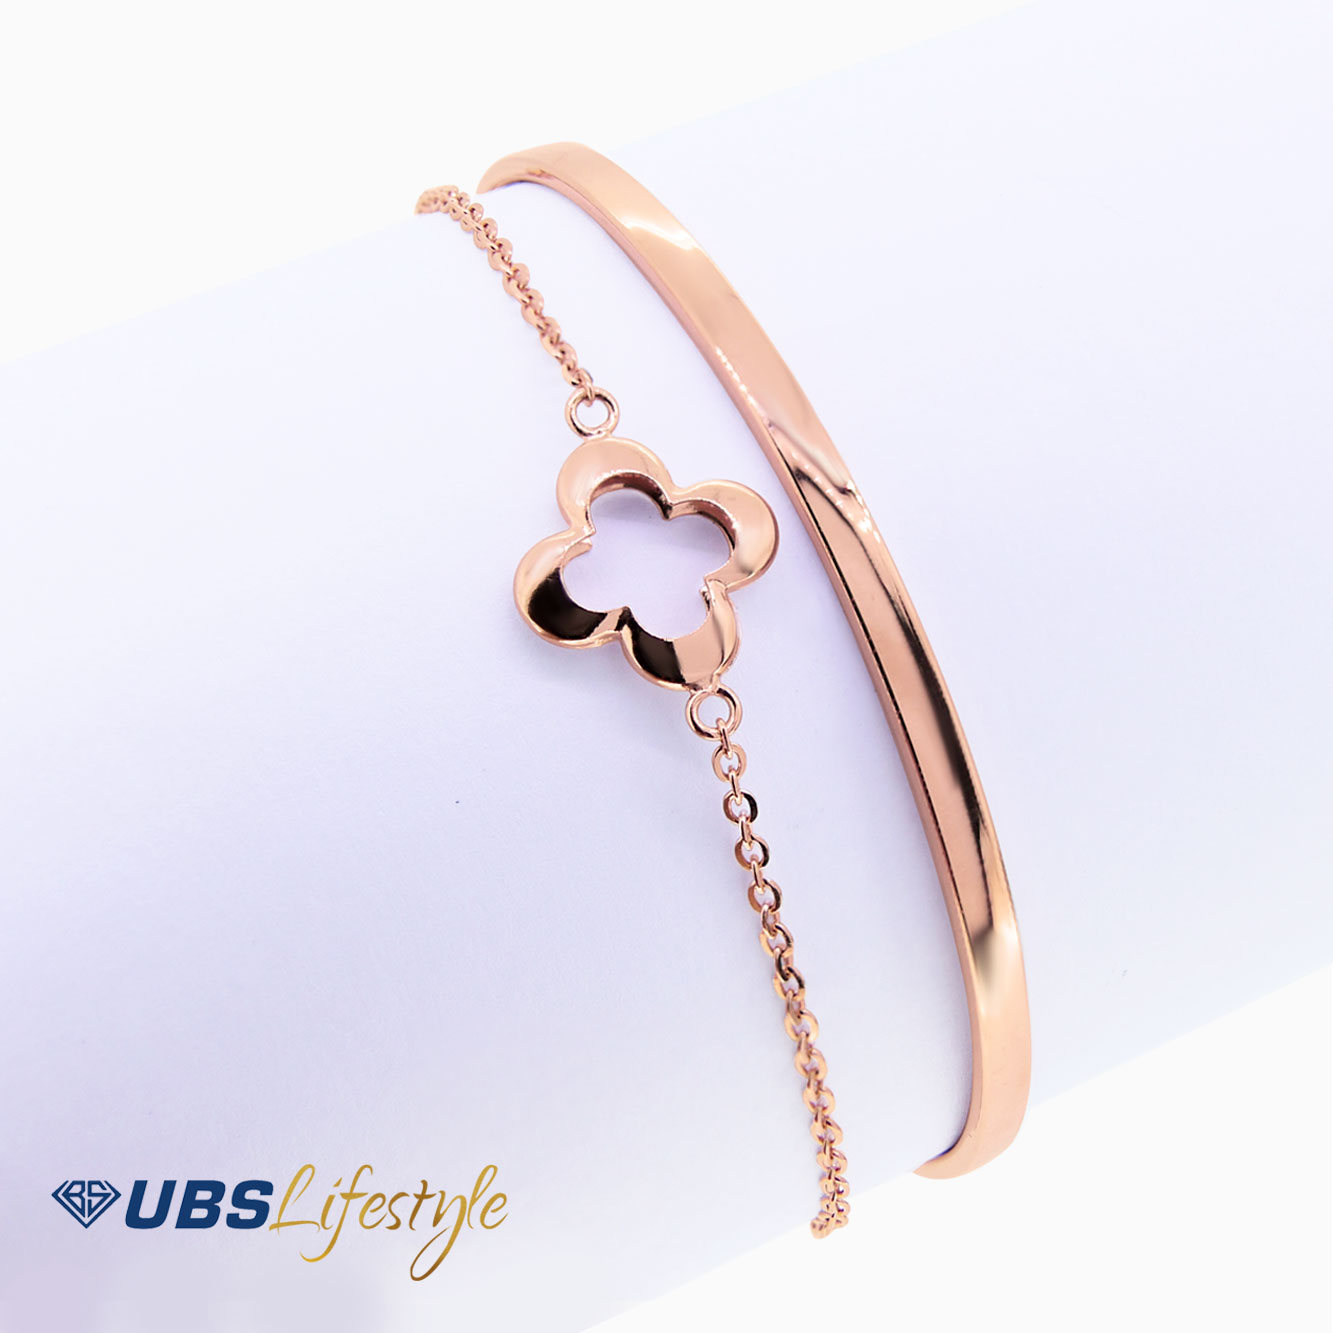 GELANG EMAS UBS UBSLifestyle  Perhiasan Emas  Gold Jewelry